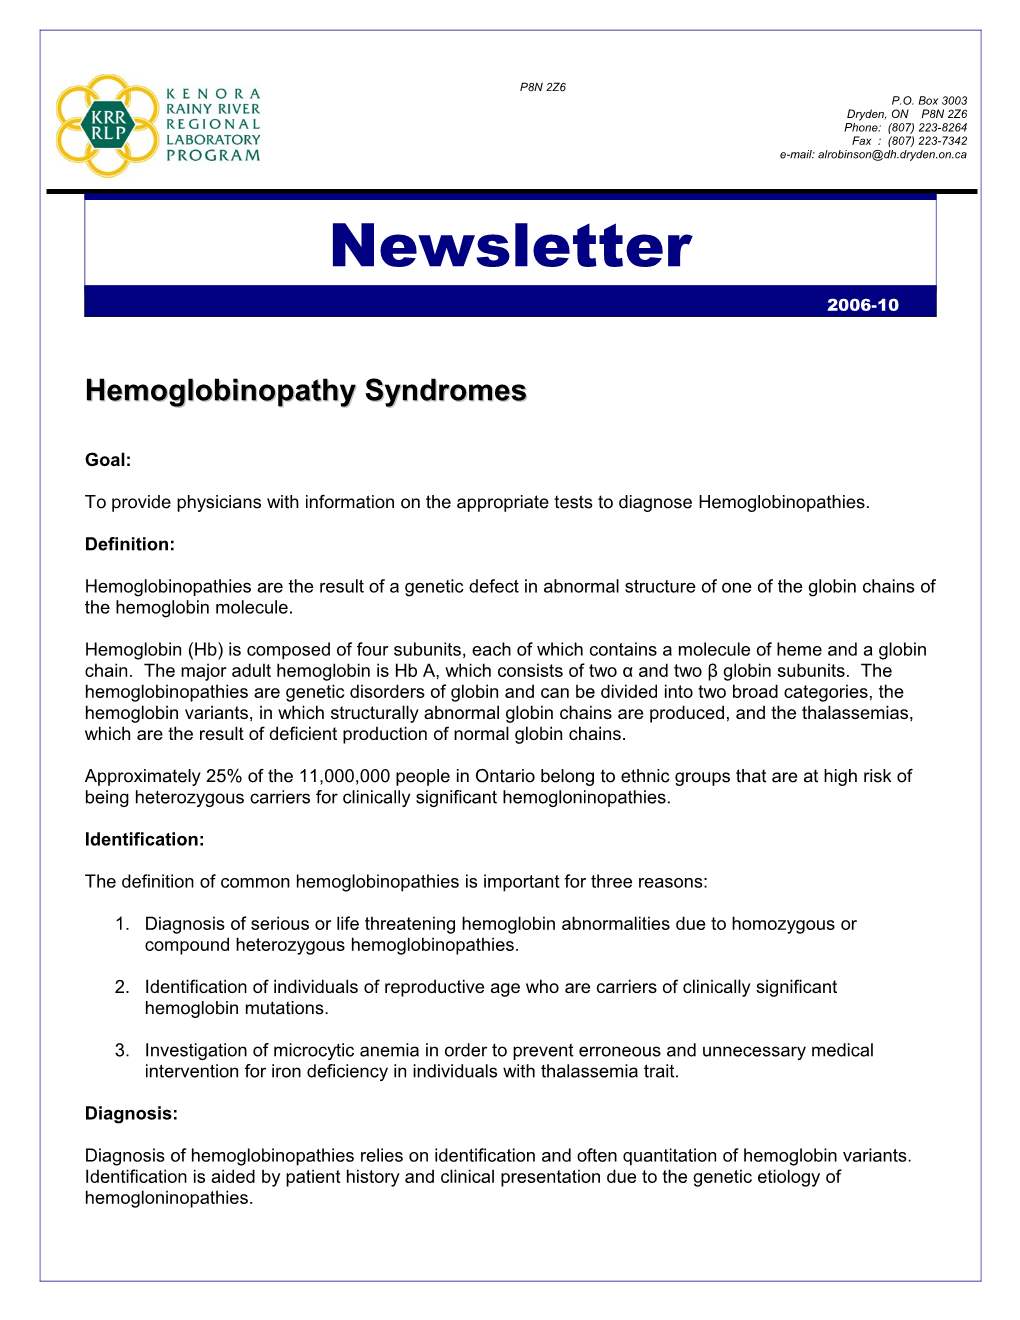 Hemoglobinopathy Syndromes